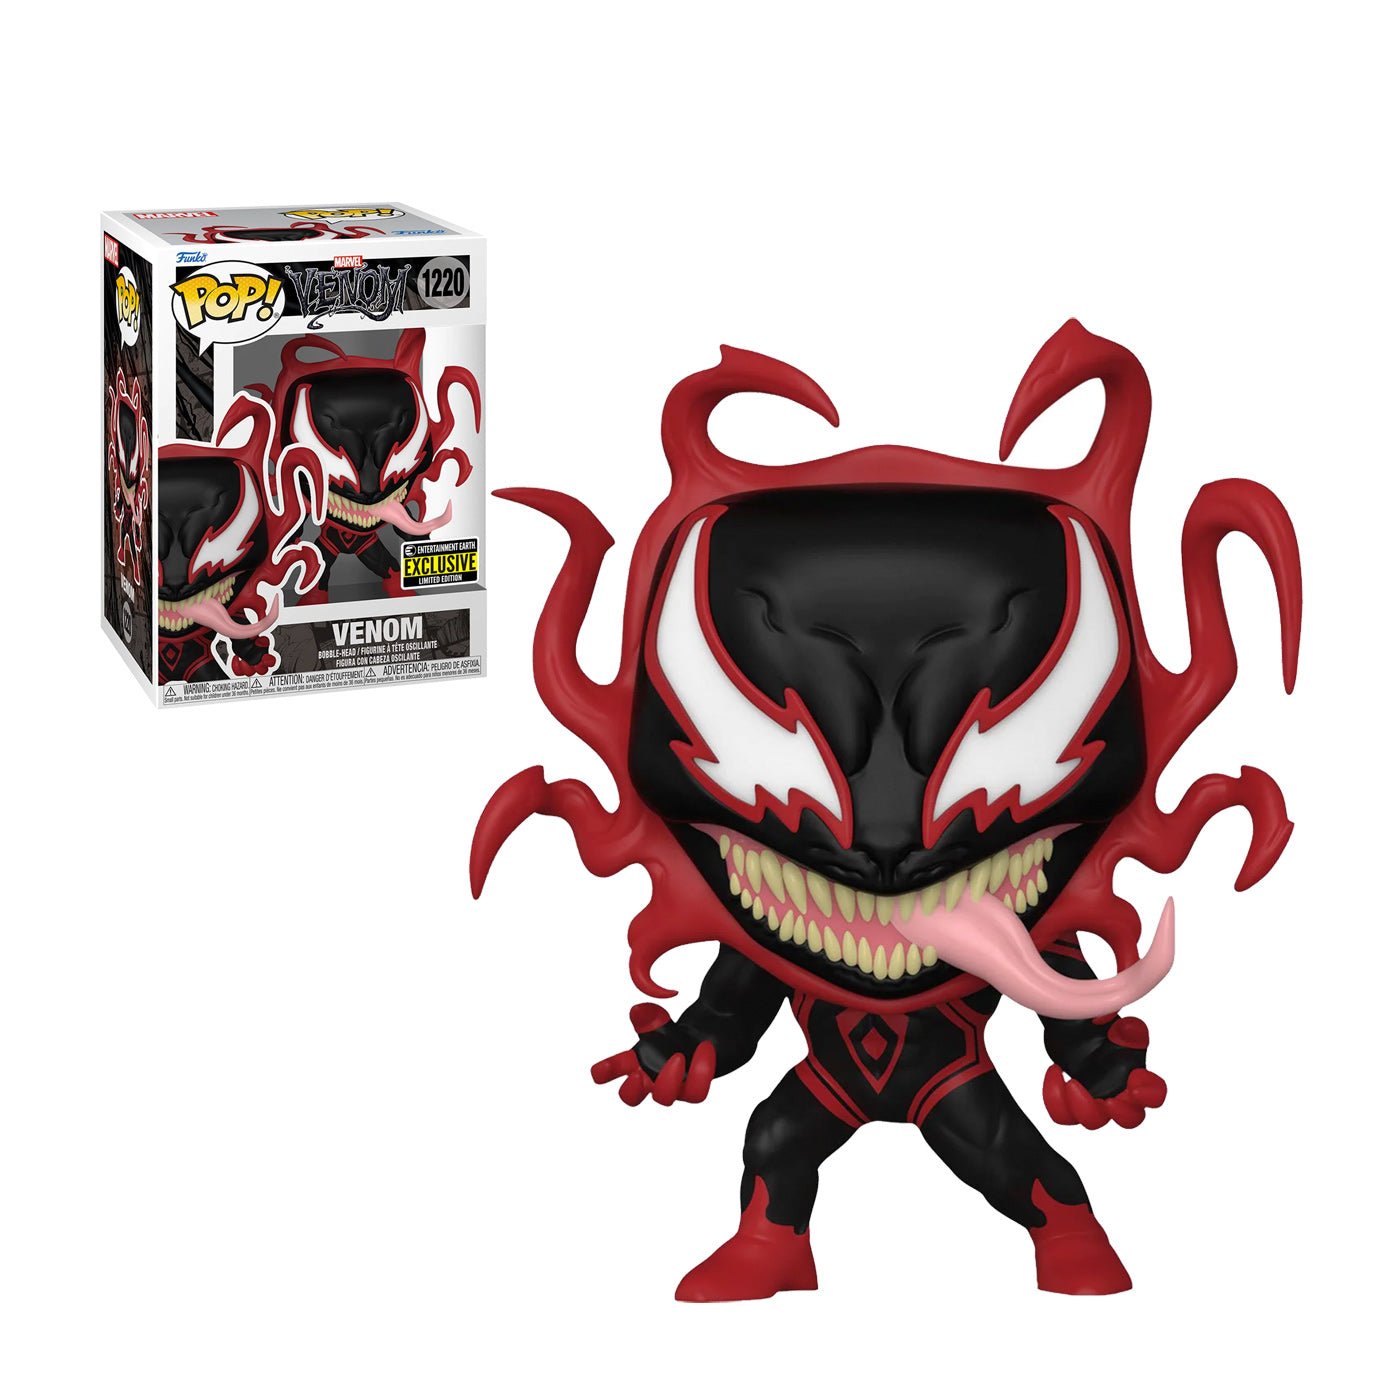 Funko Pop: Venom (1220)